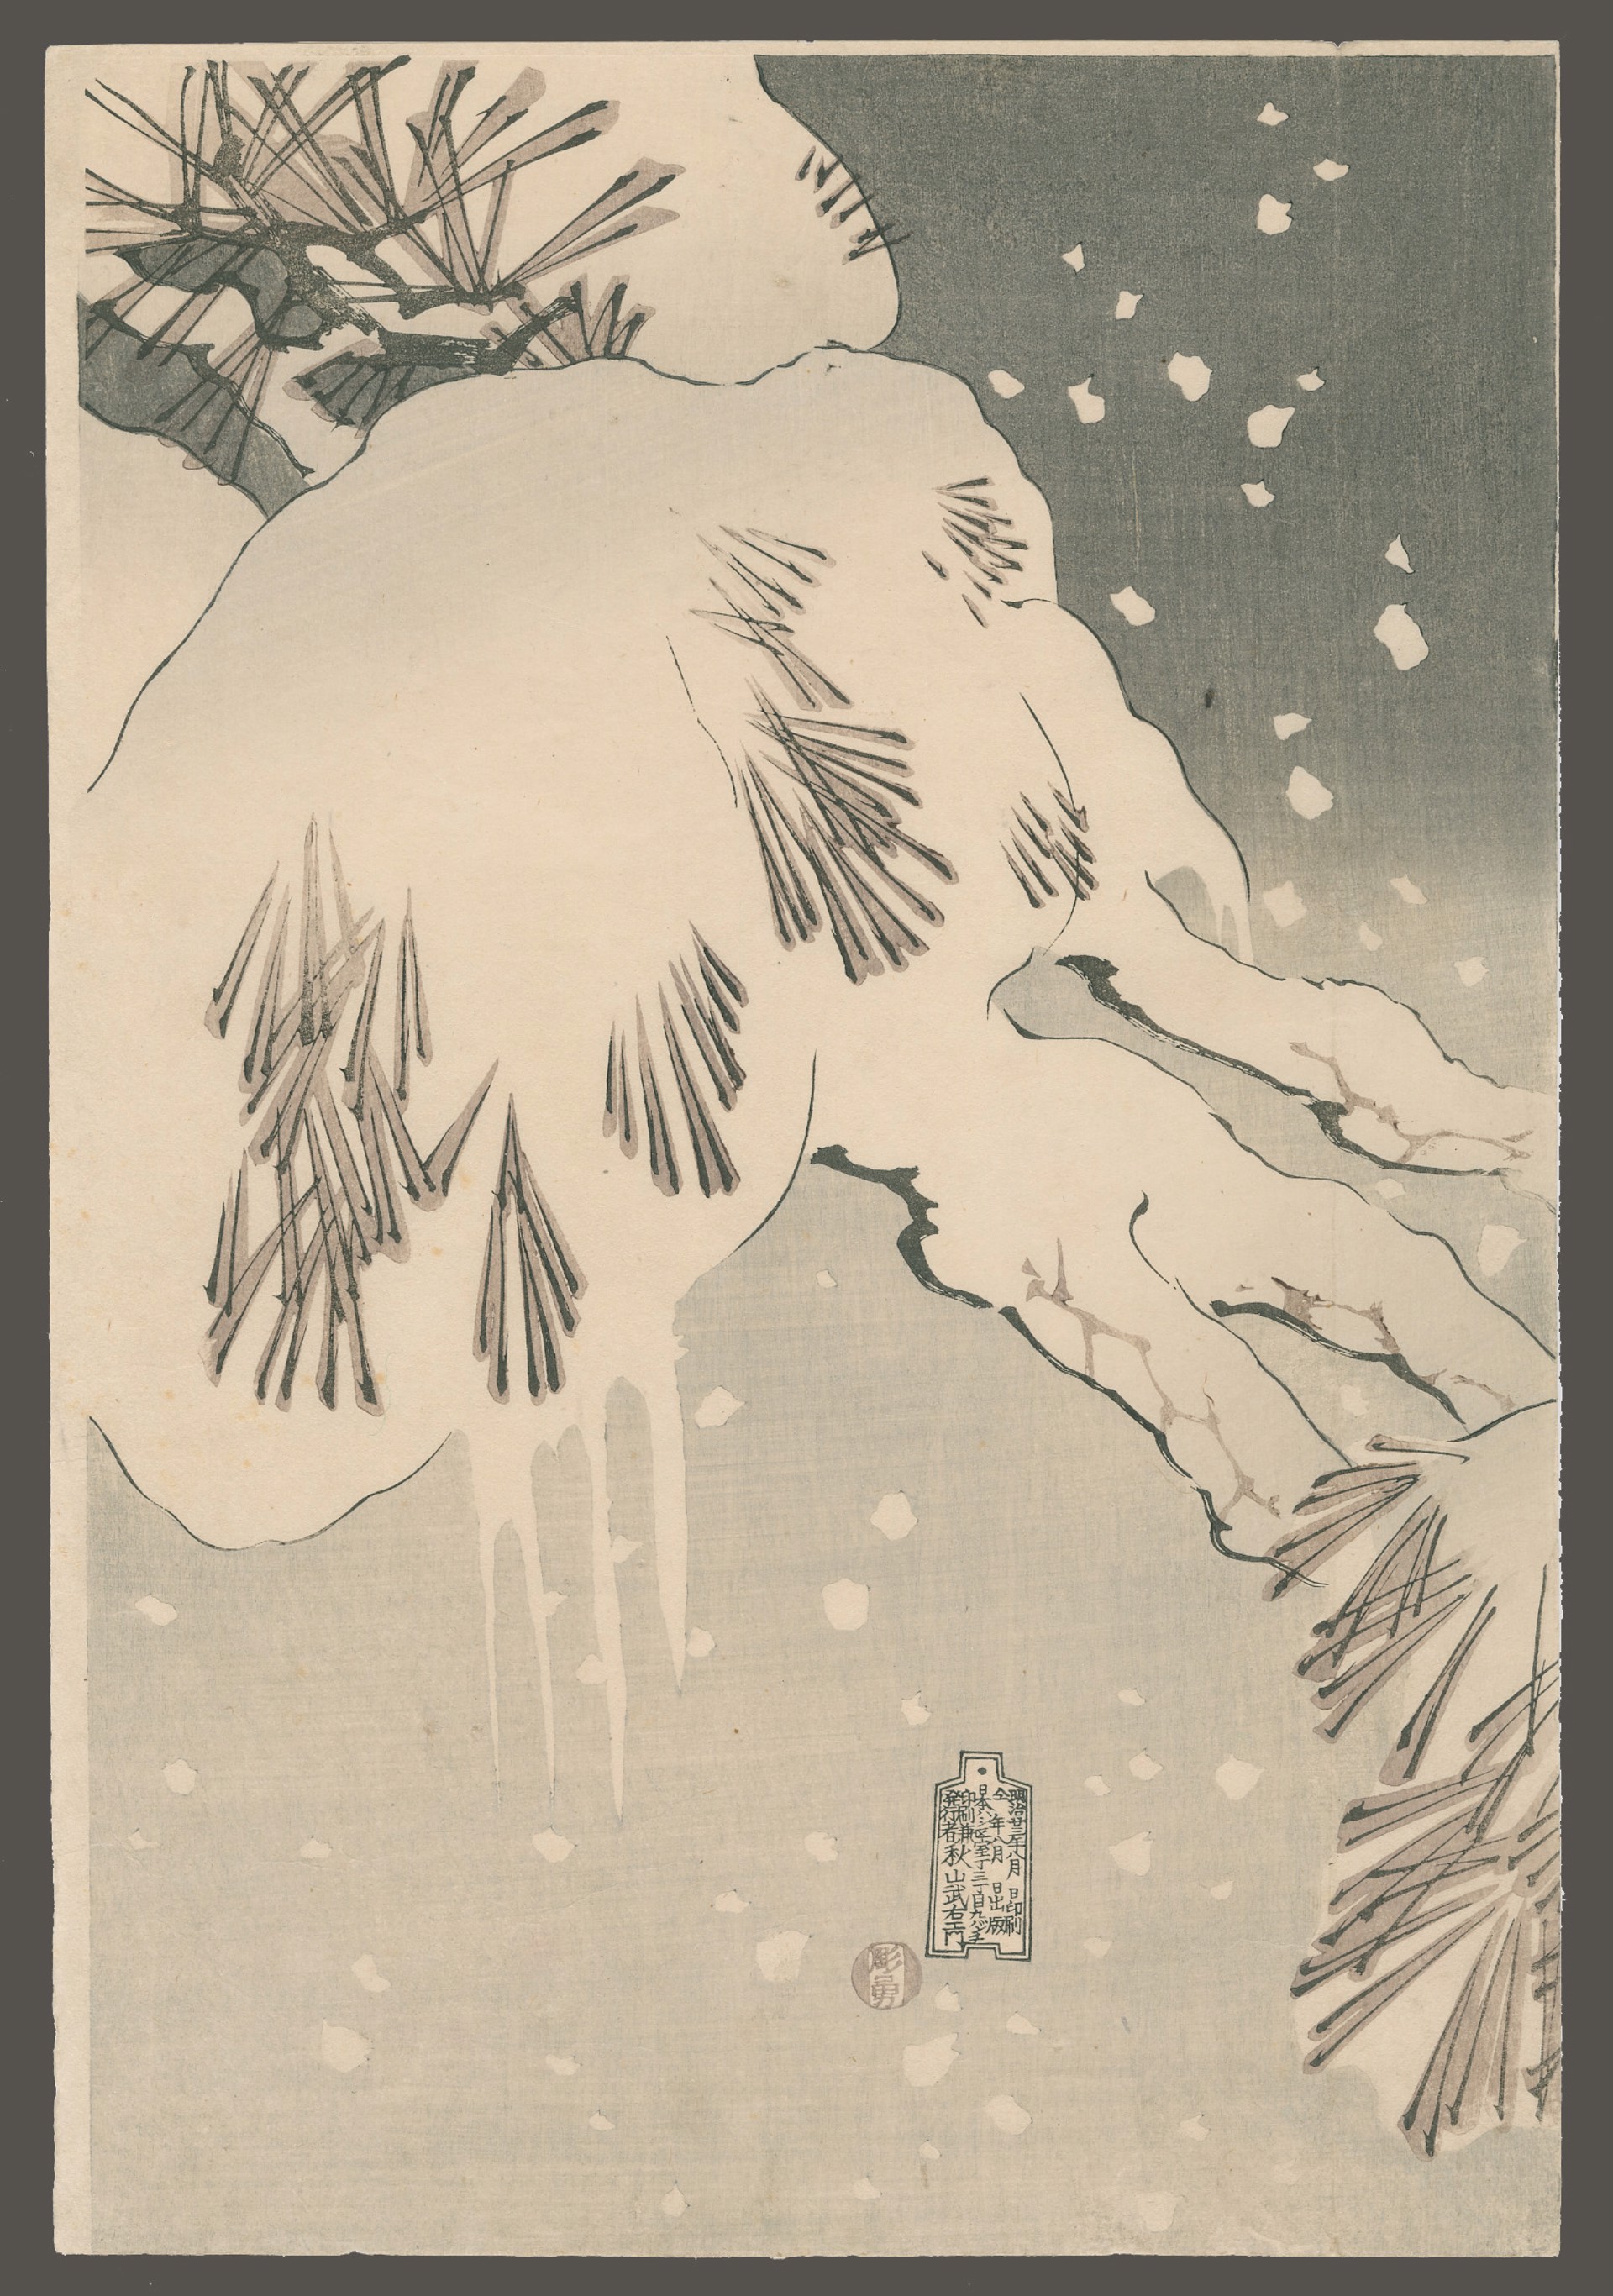 Snow - Onoe Baiko (Onoe Kikugoro V) as Iwakura Sogen Setsugekka - Snow, Moon and Flower by Yoshitoshi